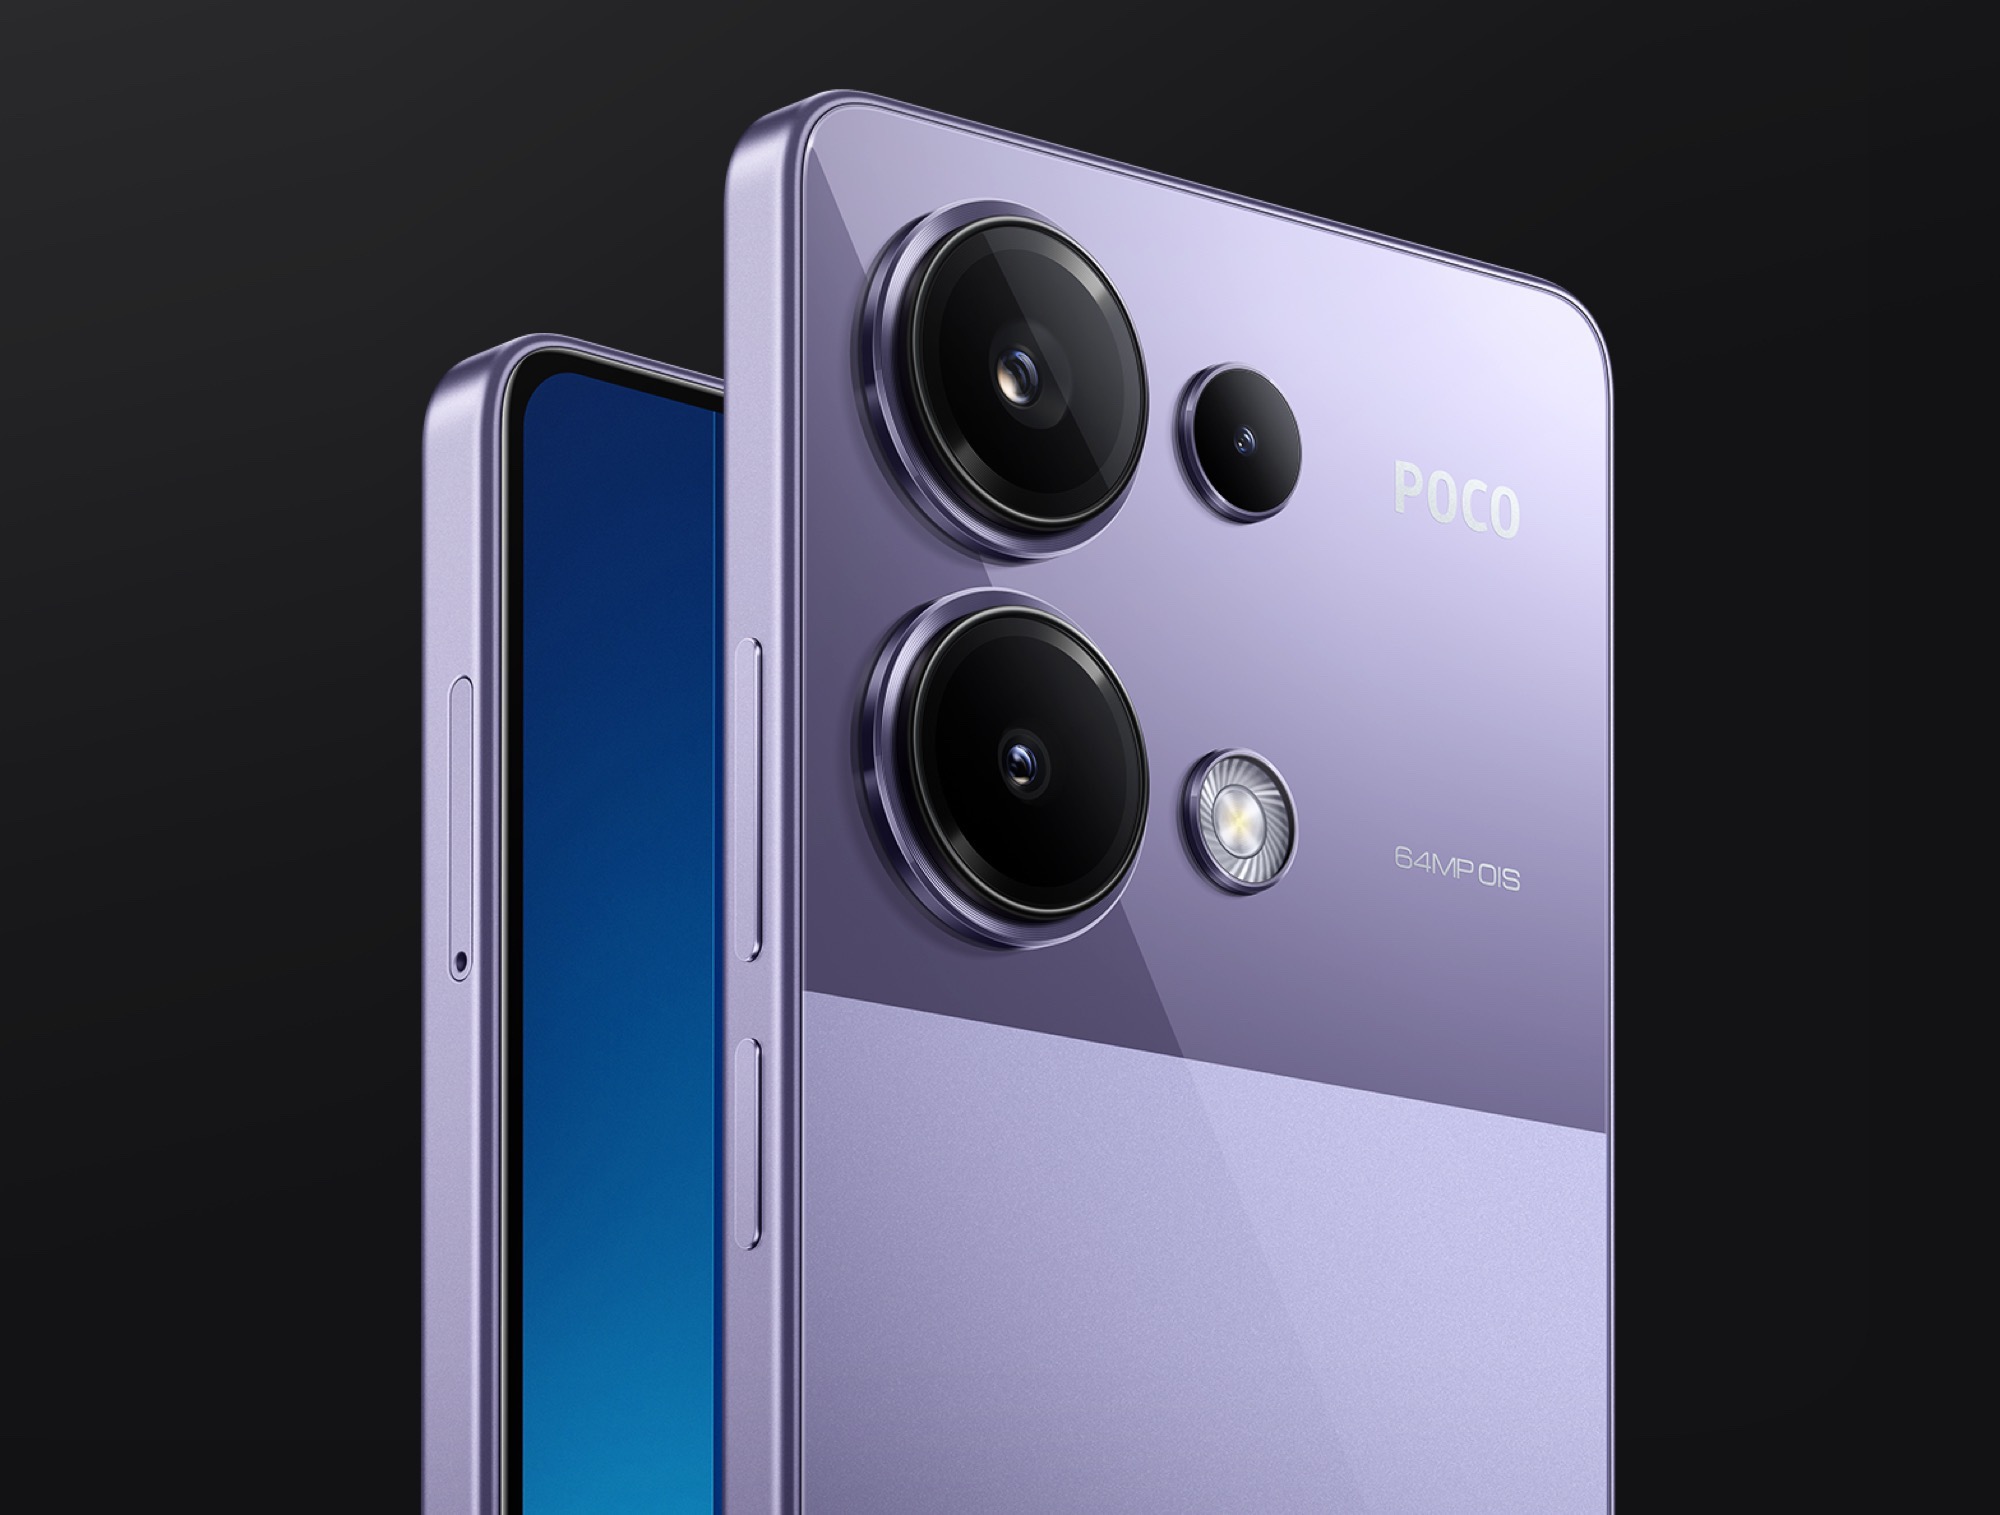 POCO To Unveil Three New Smartphones: X6, X6 Pro, and M6 5G